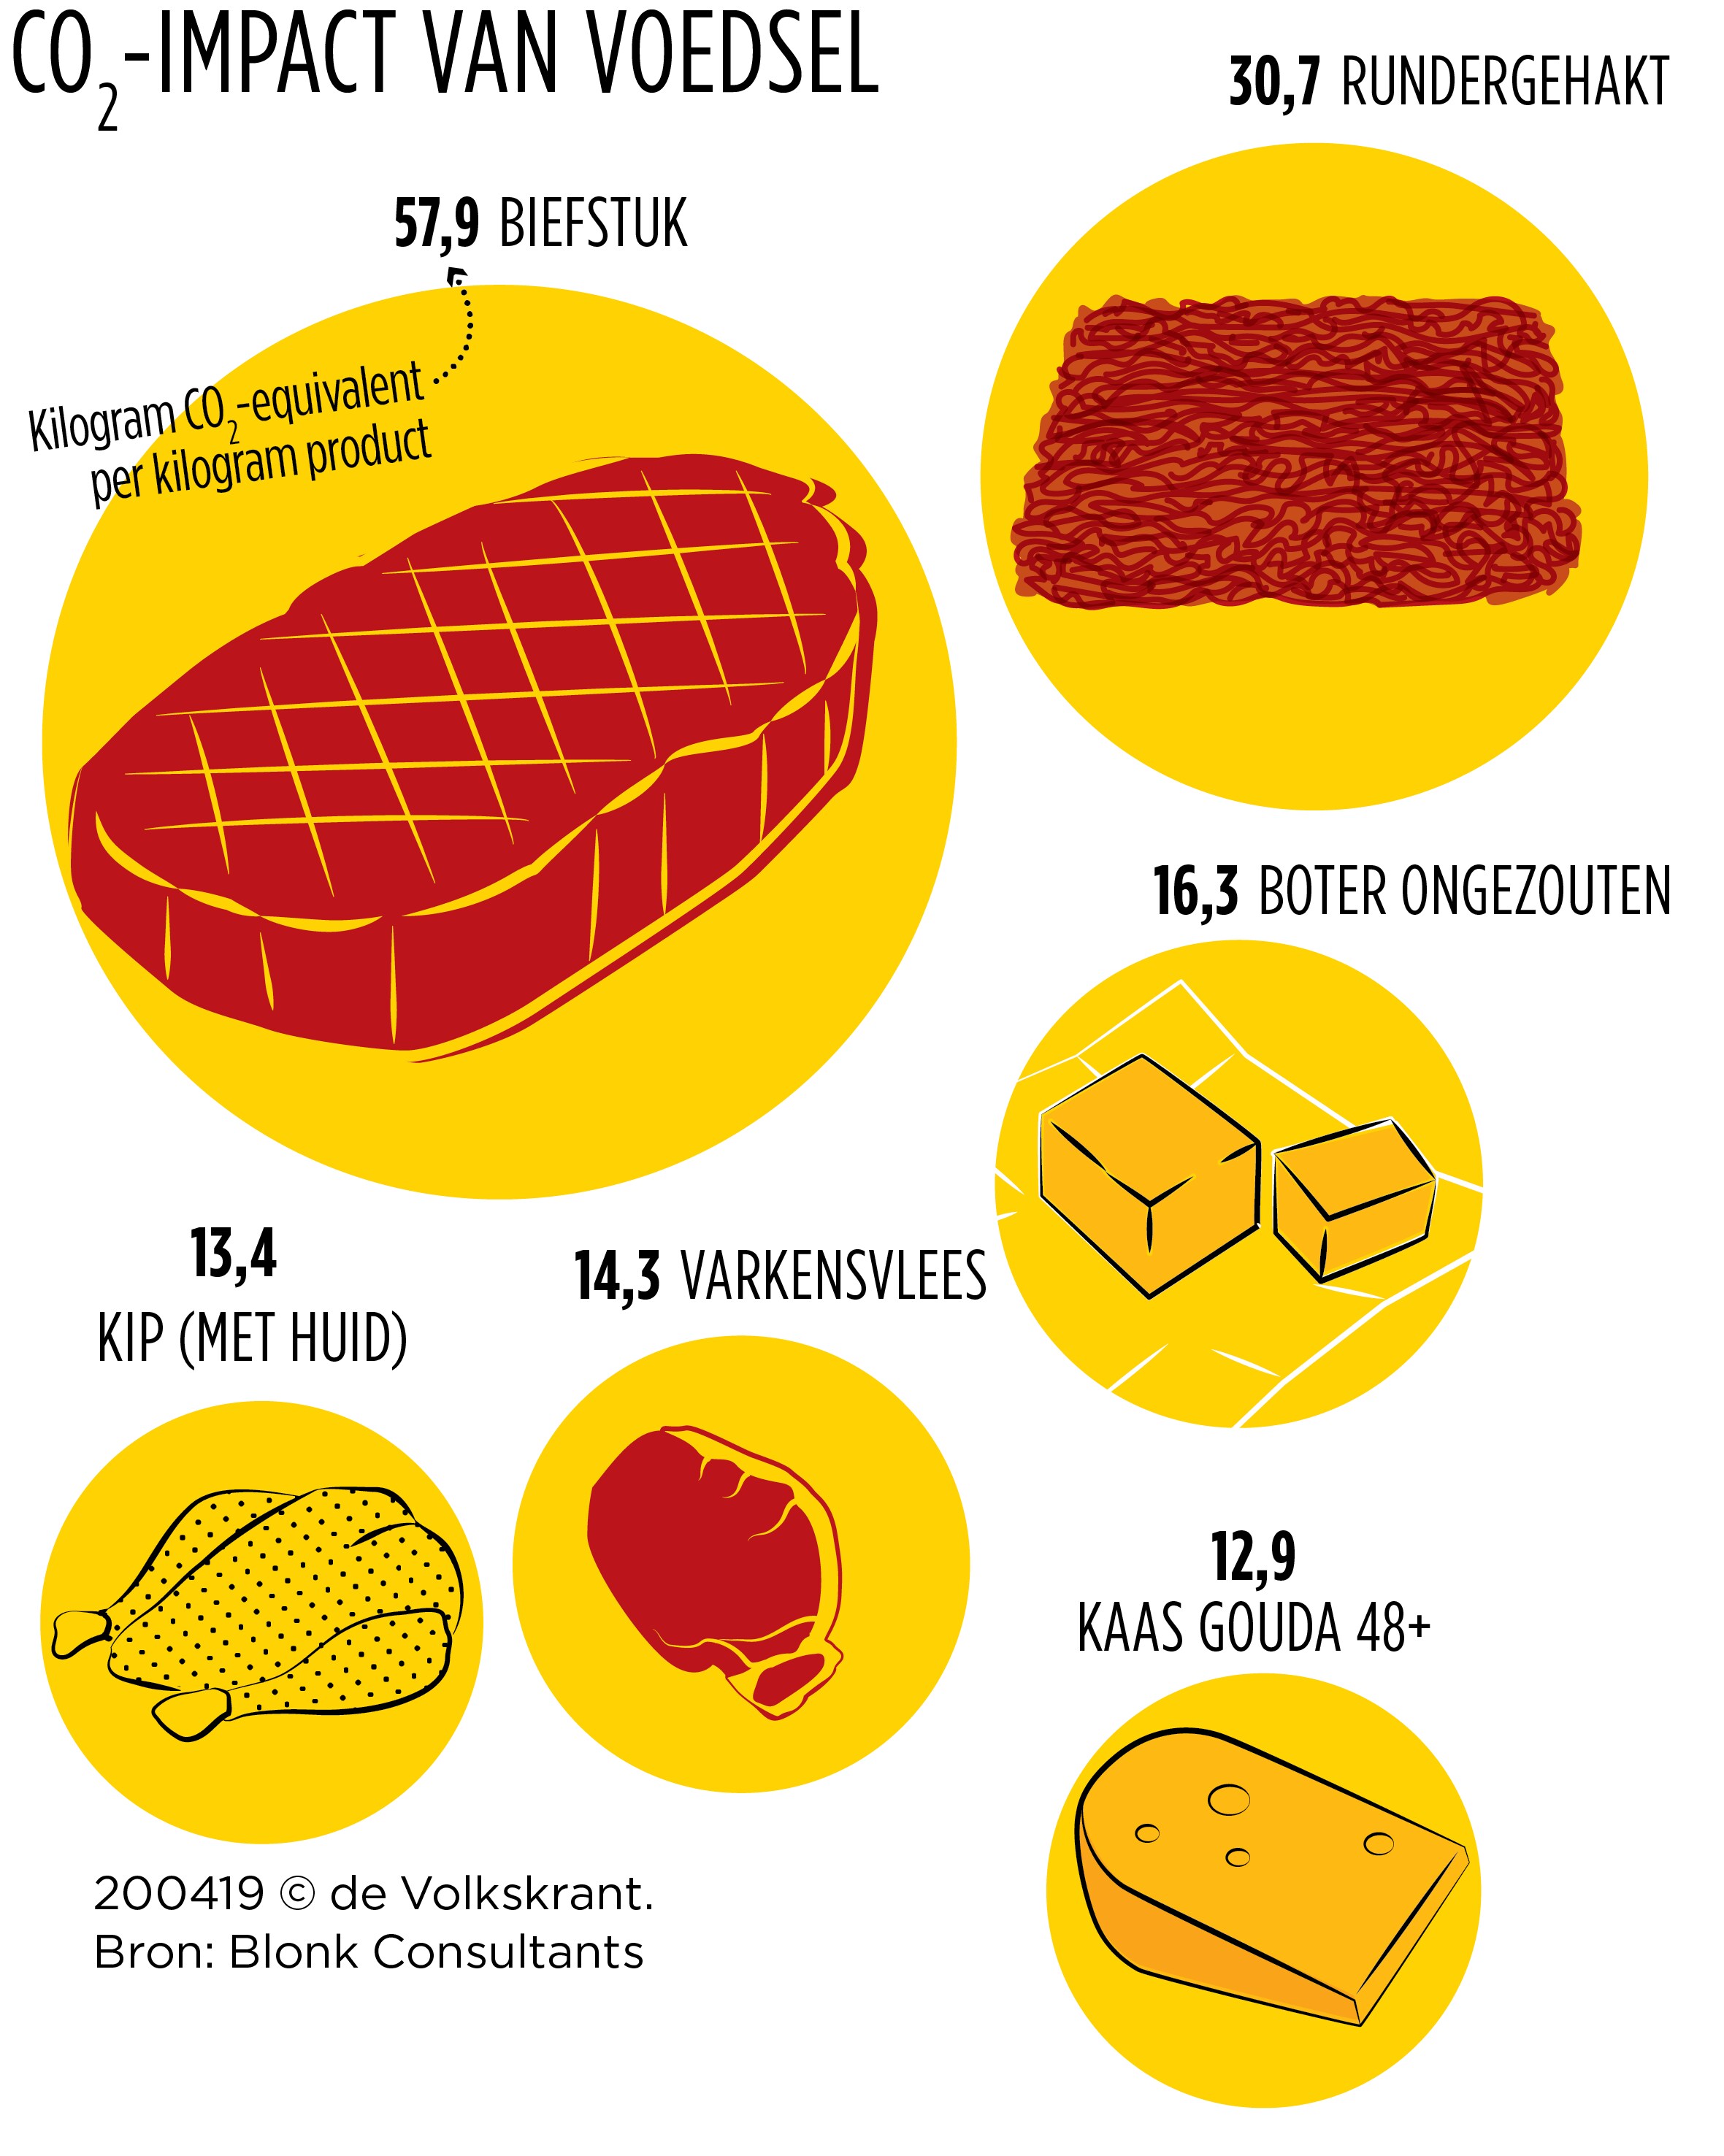 Waarom het beter is om minder kaas te eten